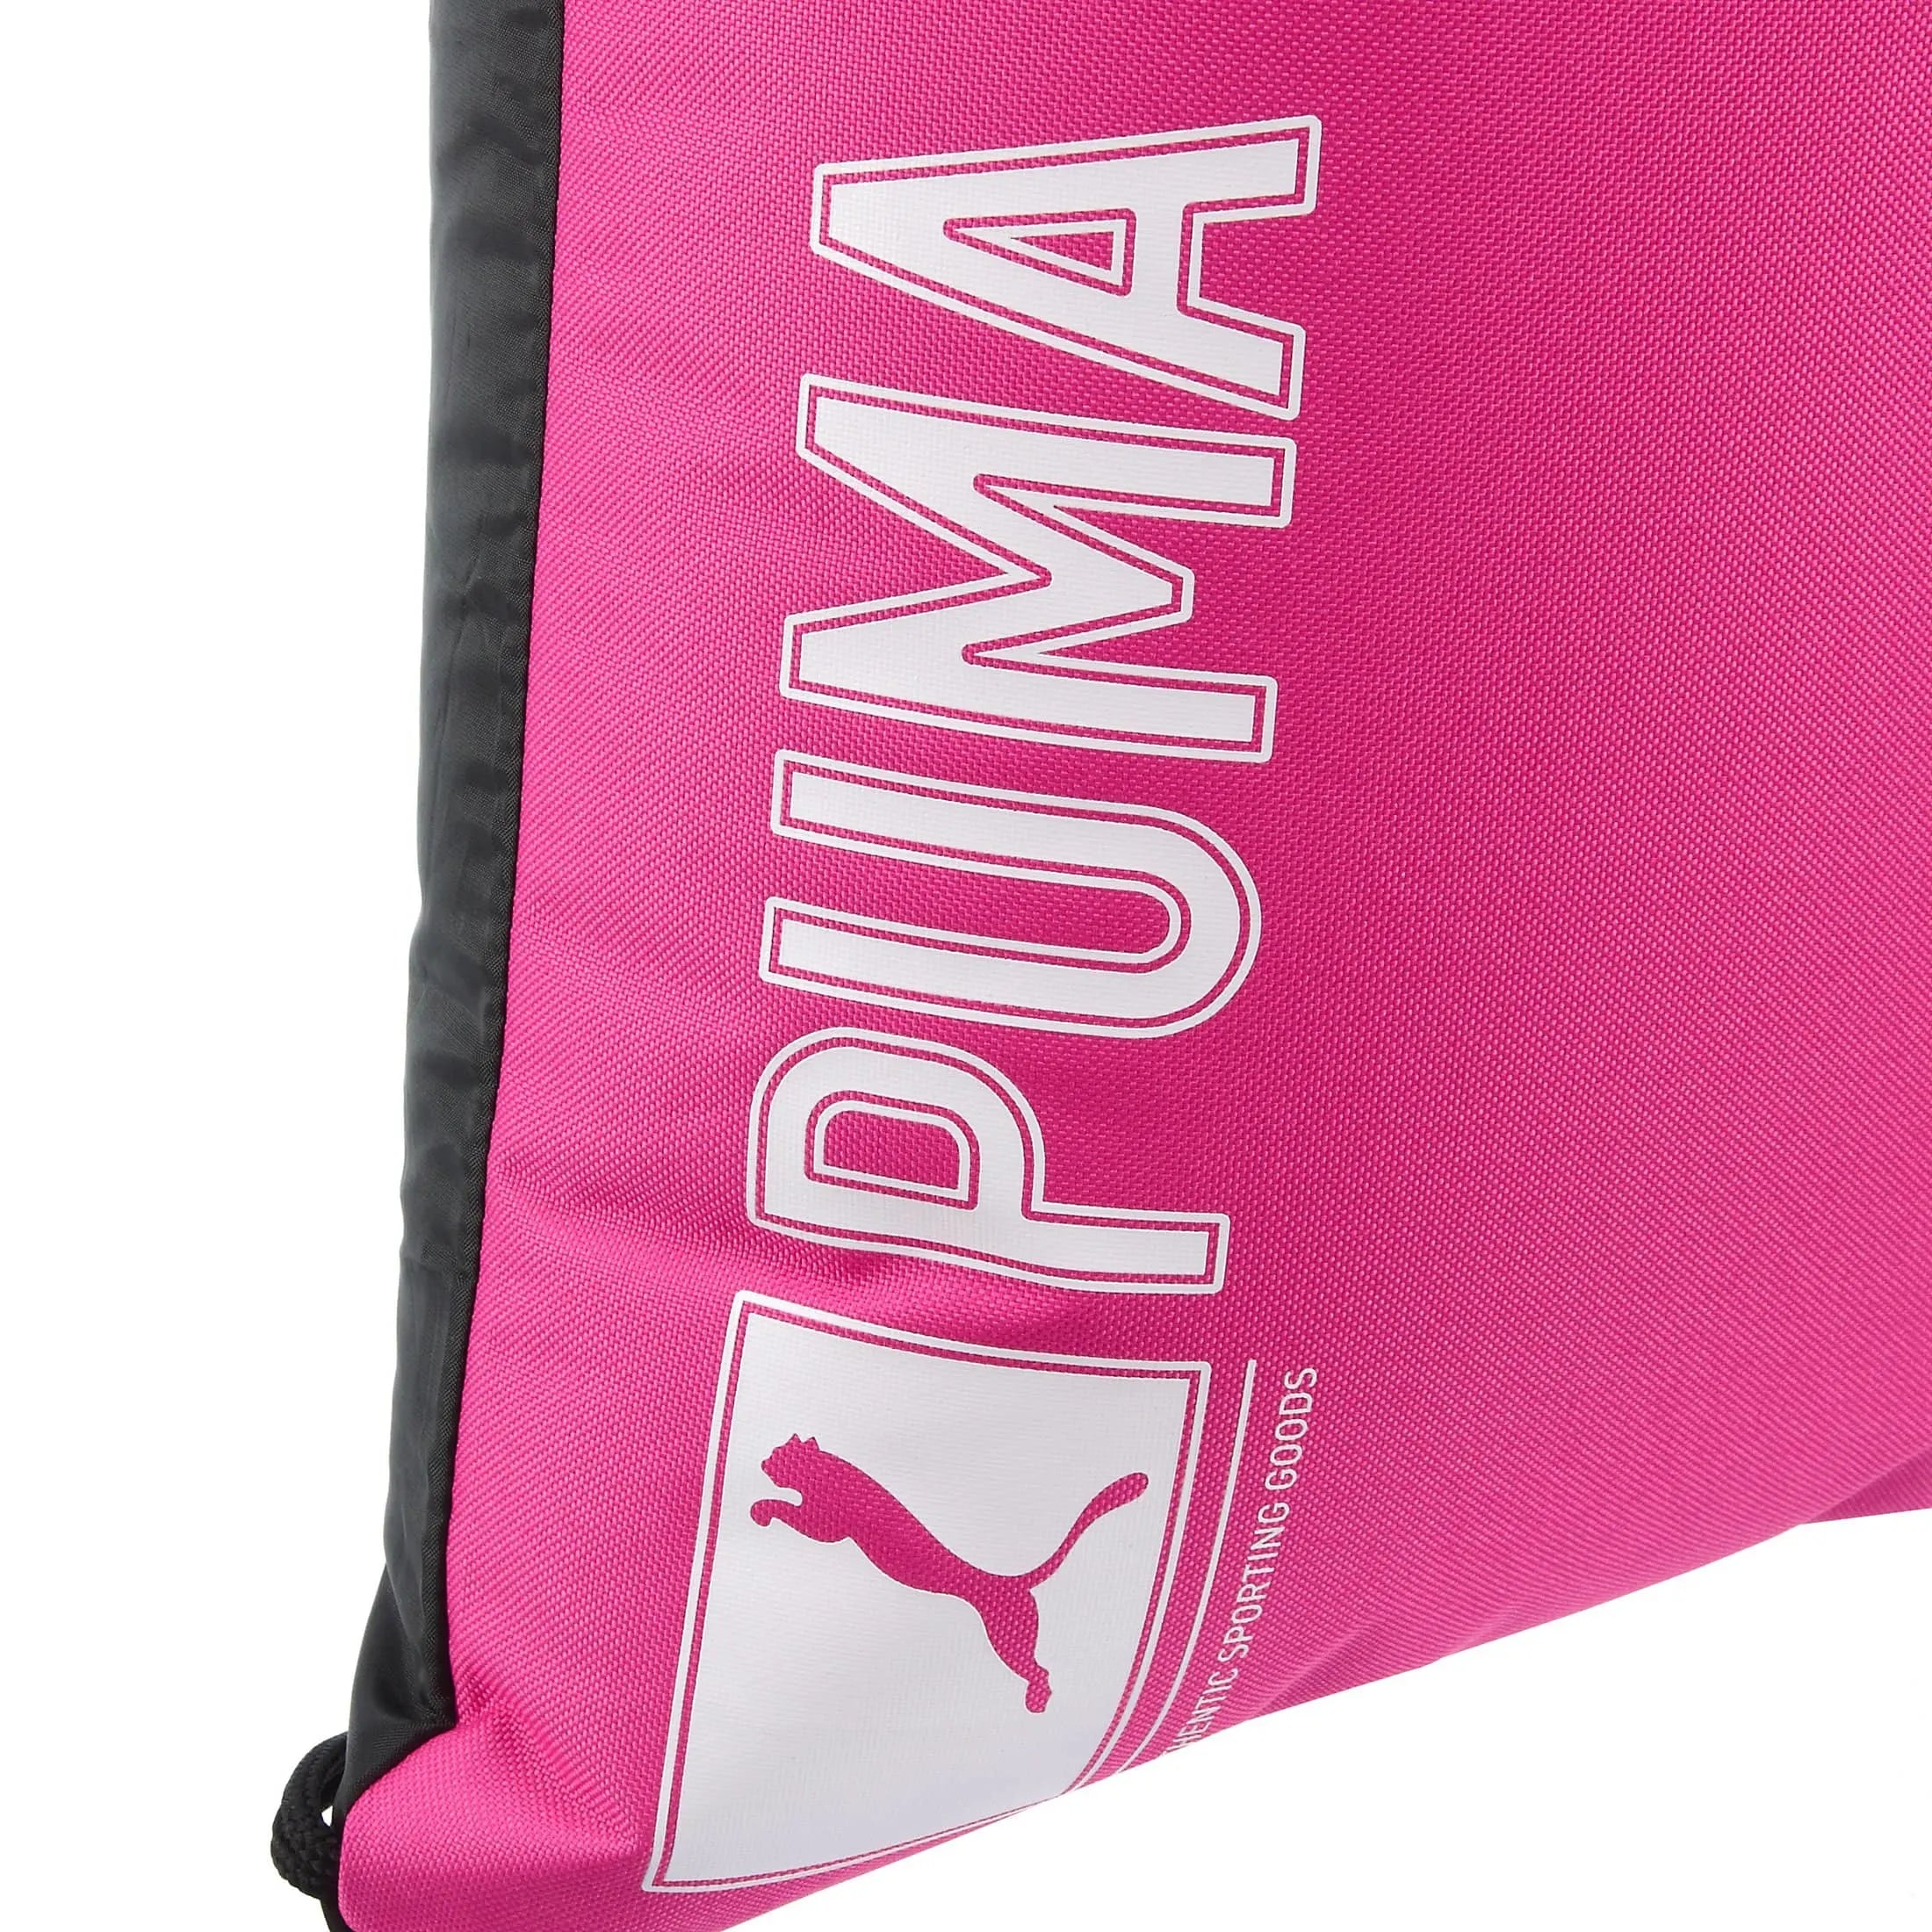 Puma Pioneer Gymnastic Sack sports bag 47 cm - rose violet